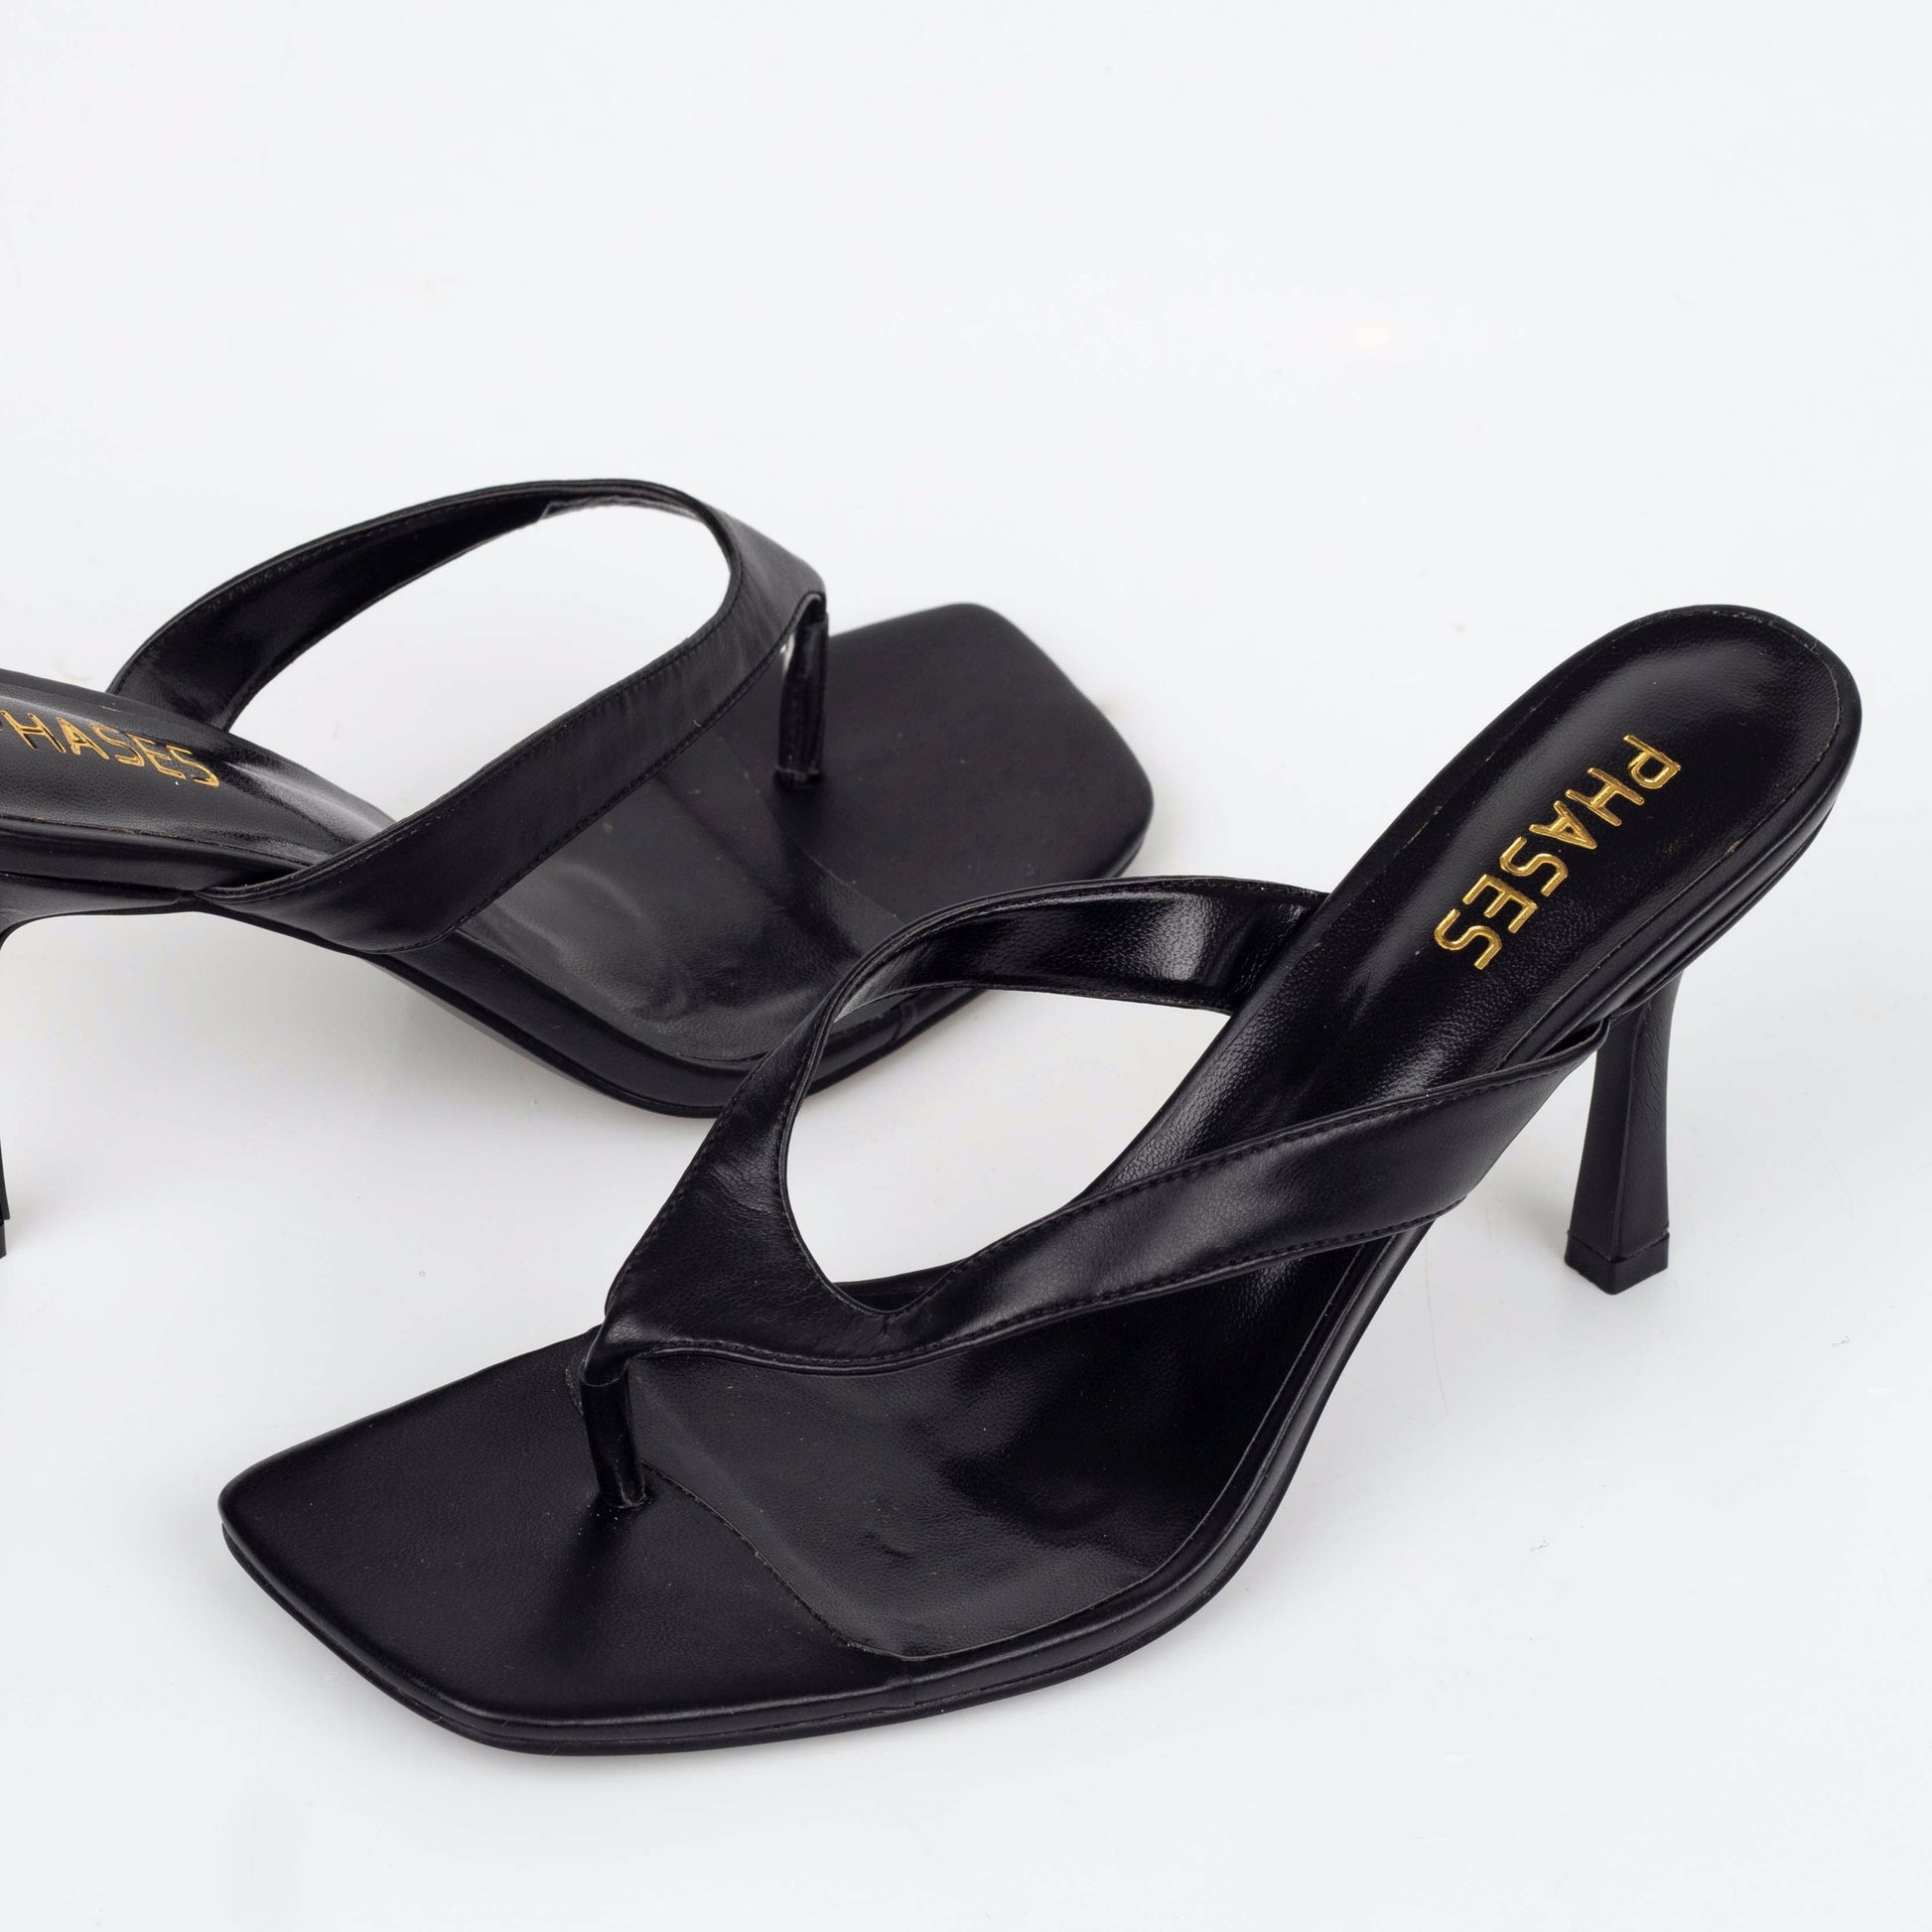 Close up of black flip-flop heels with gold logo